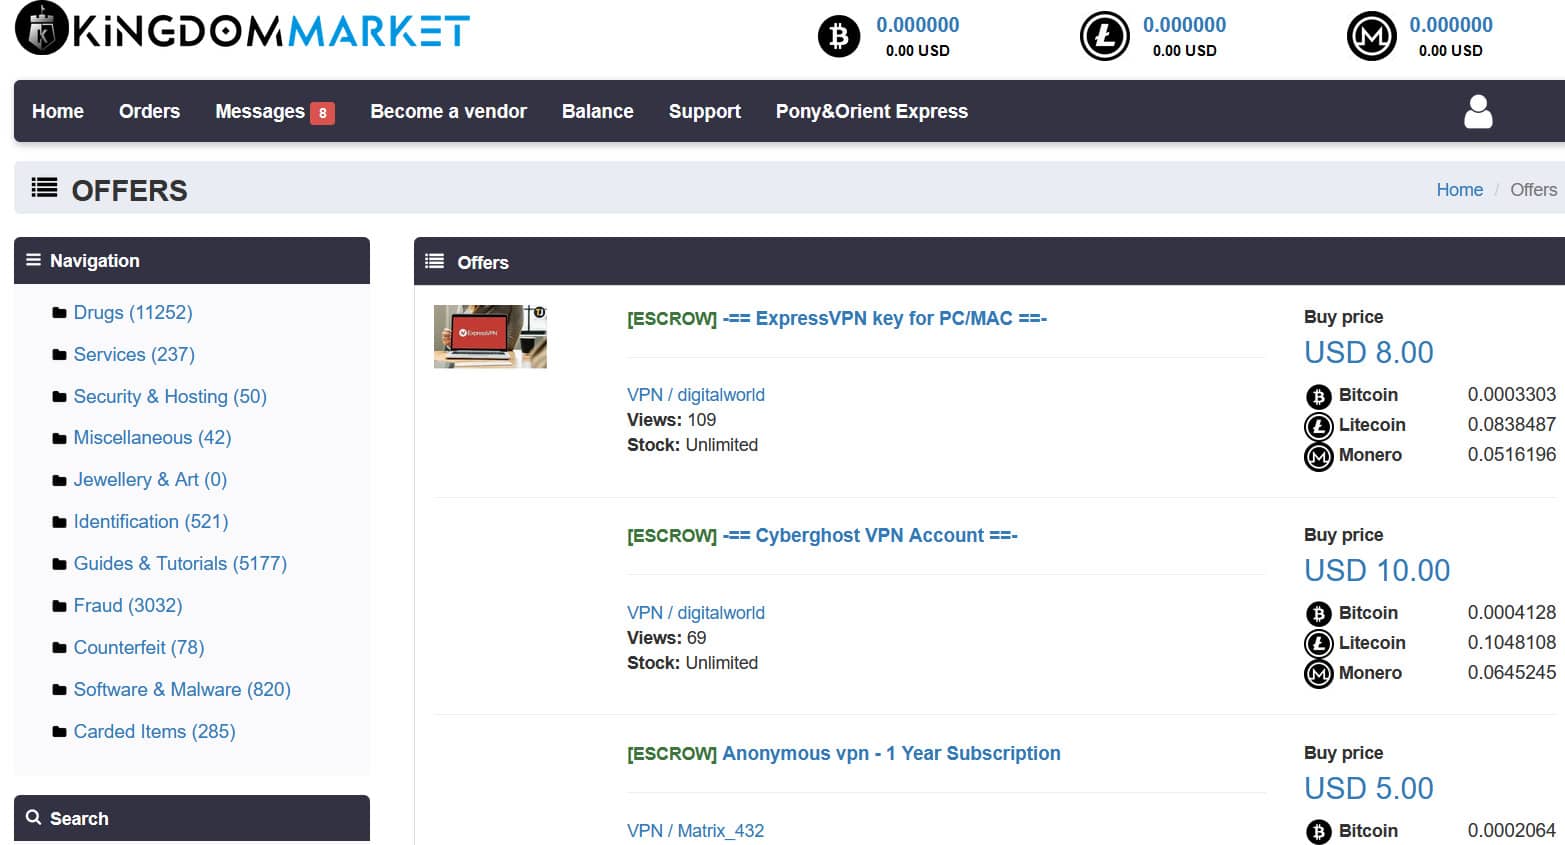 A screenshot of darknet market Kingdom showing fraud items for sale